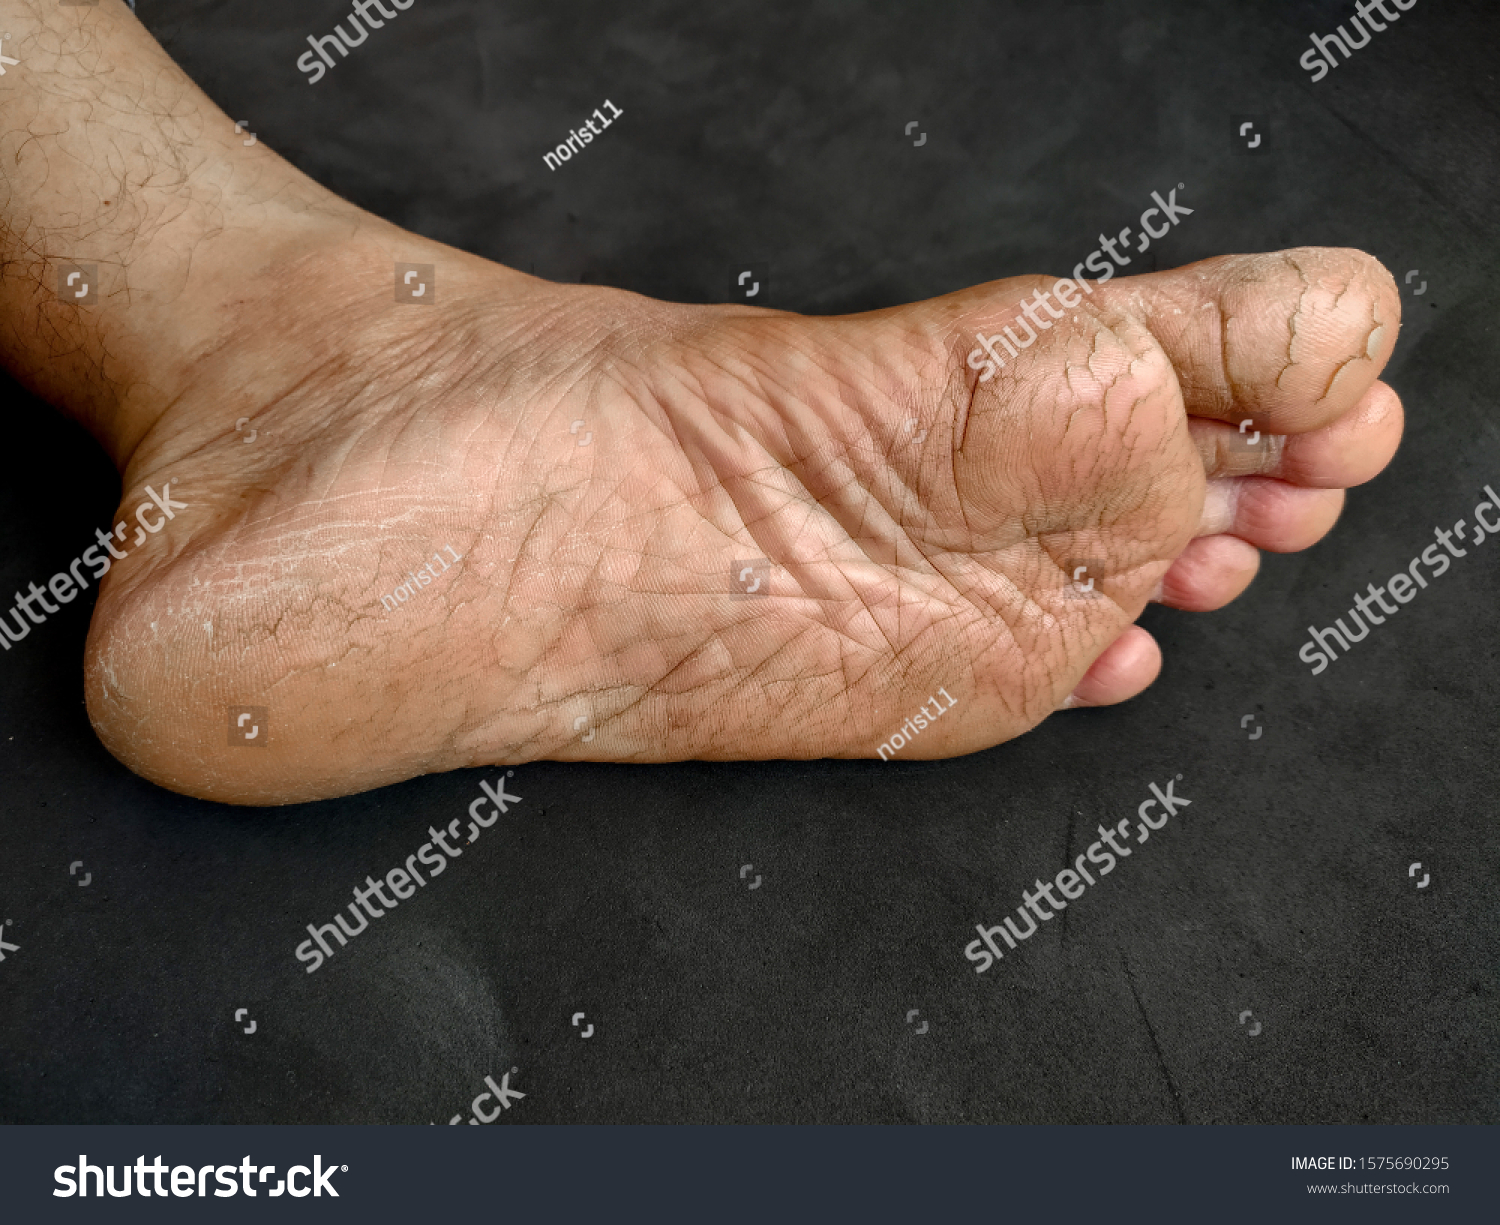 cracked soles